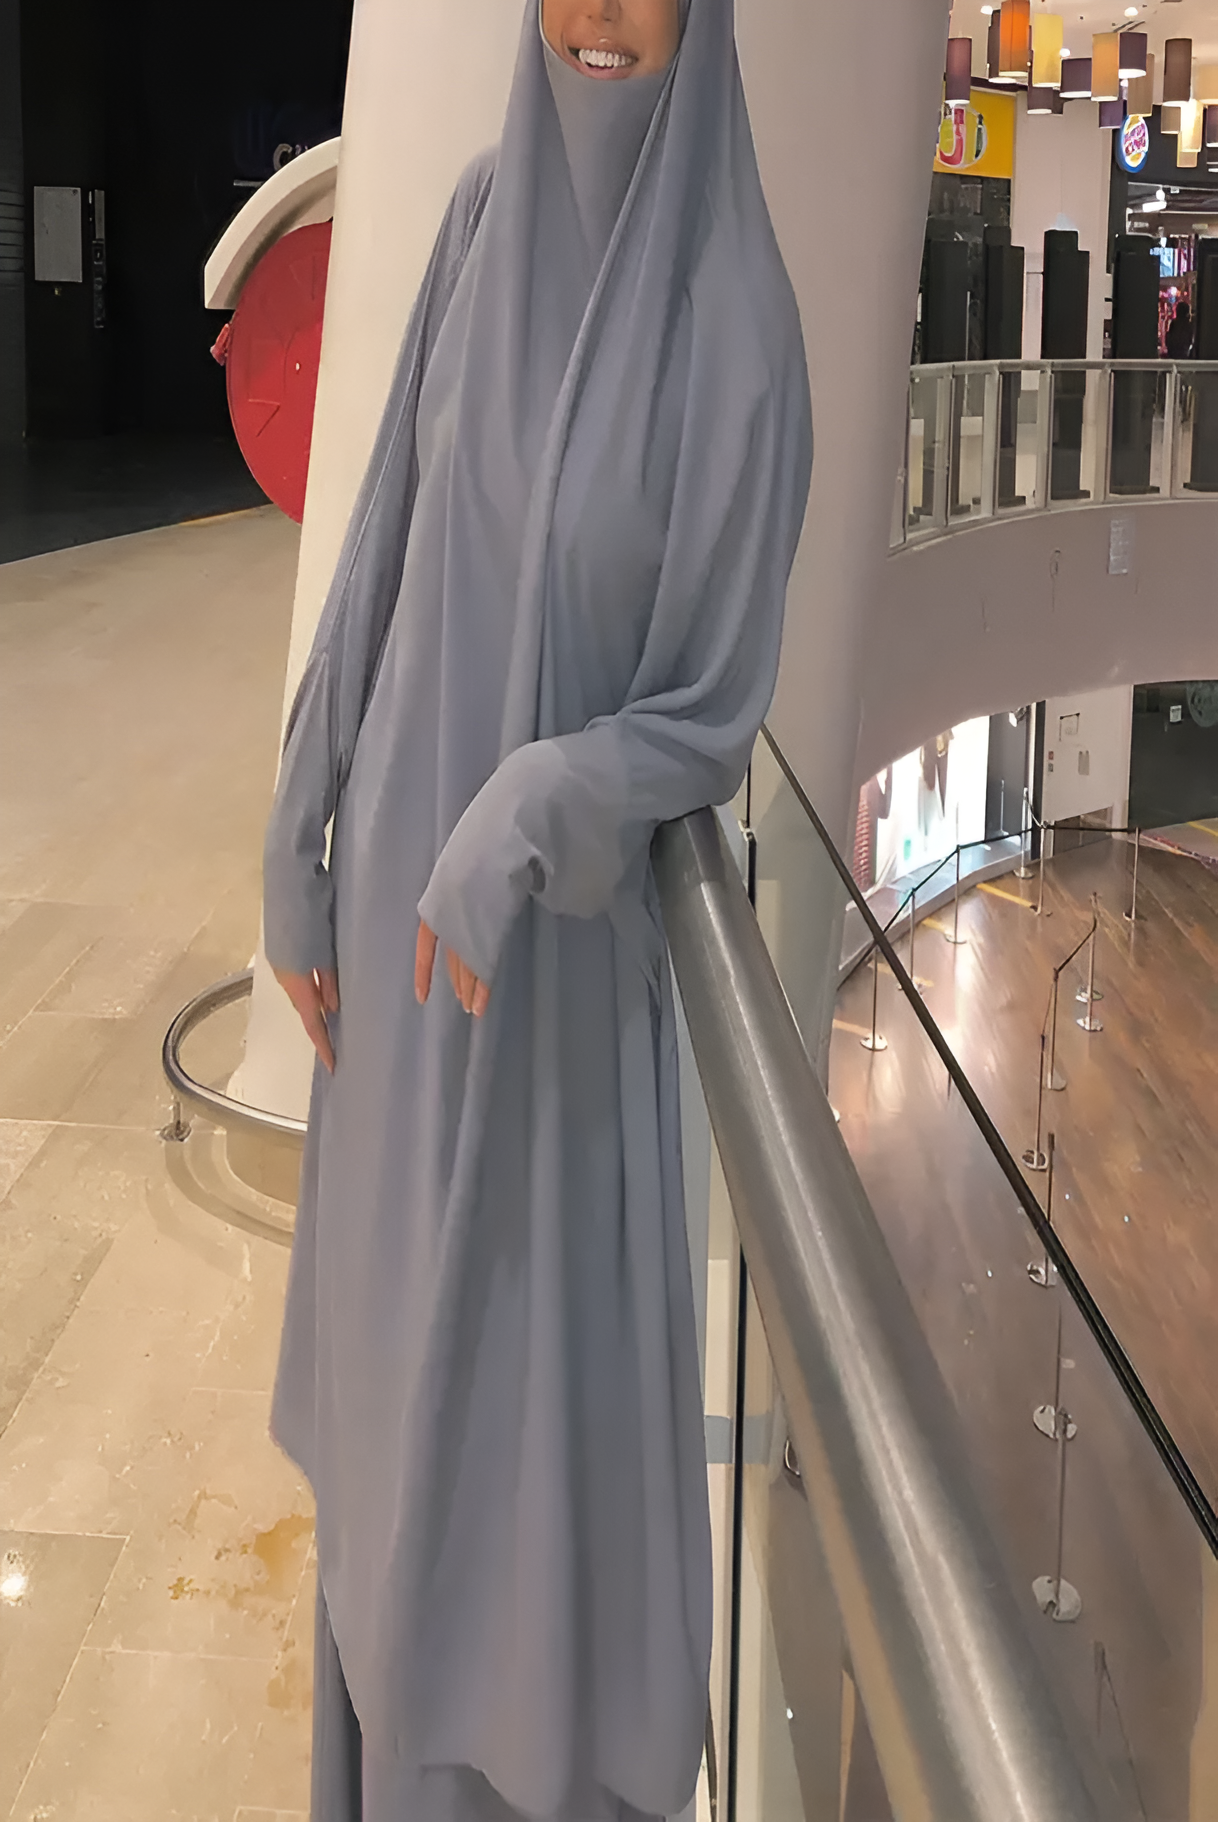 a woman wearing a grey dress